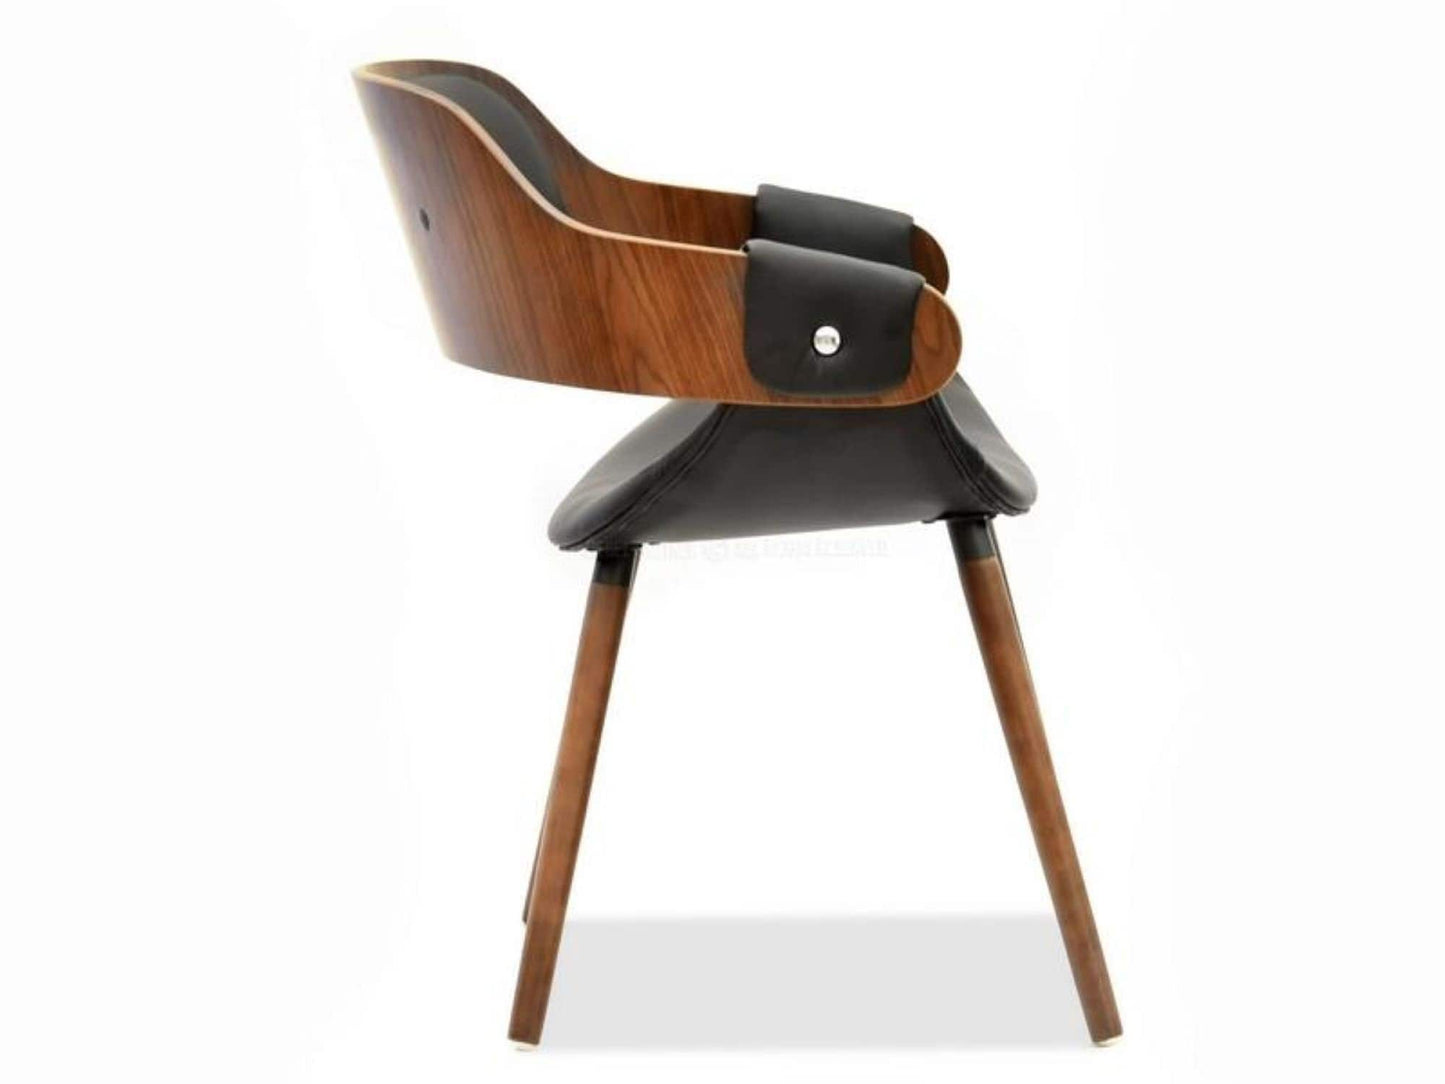 NEW Designer RETRO SCANDI Style dining/ office / desk chair grey or black and walnut wood veneer